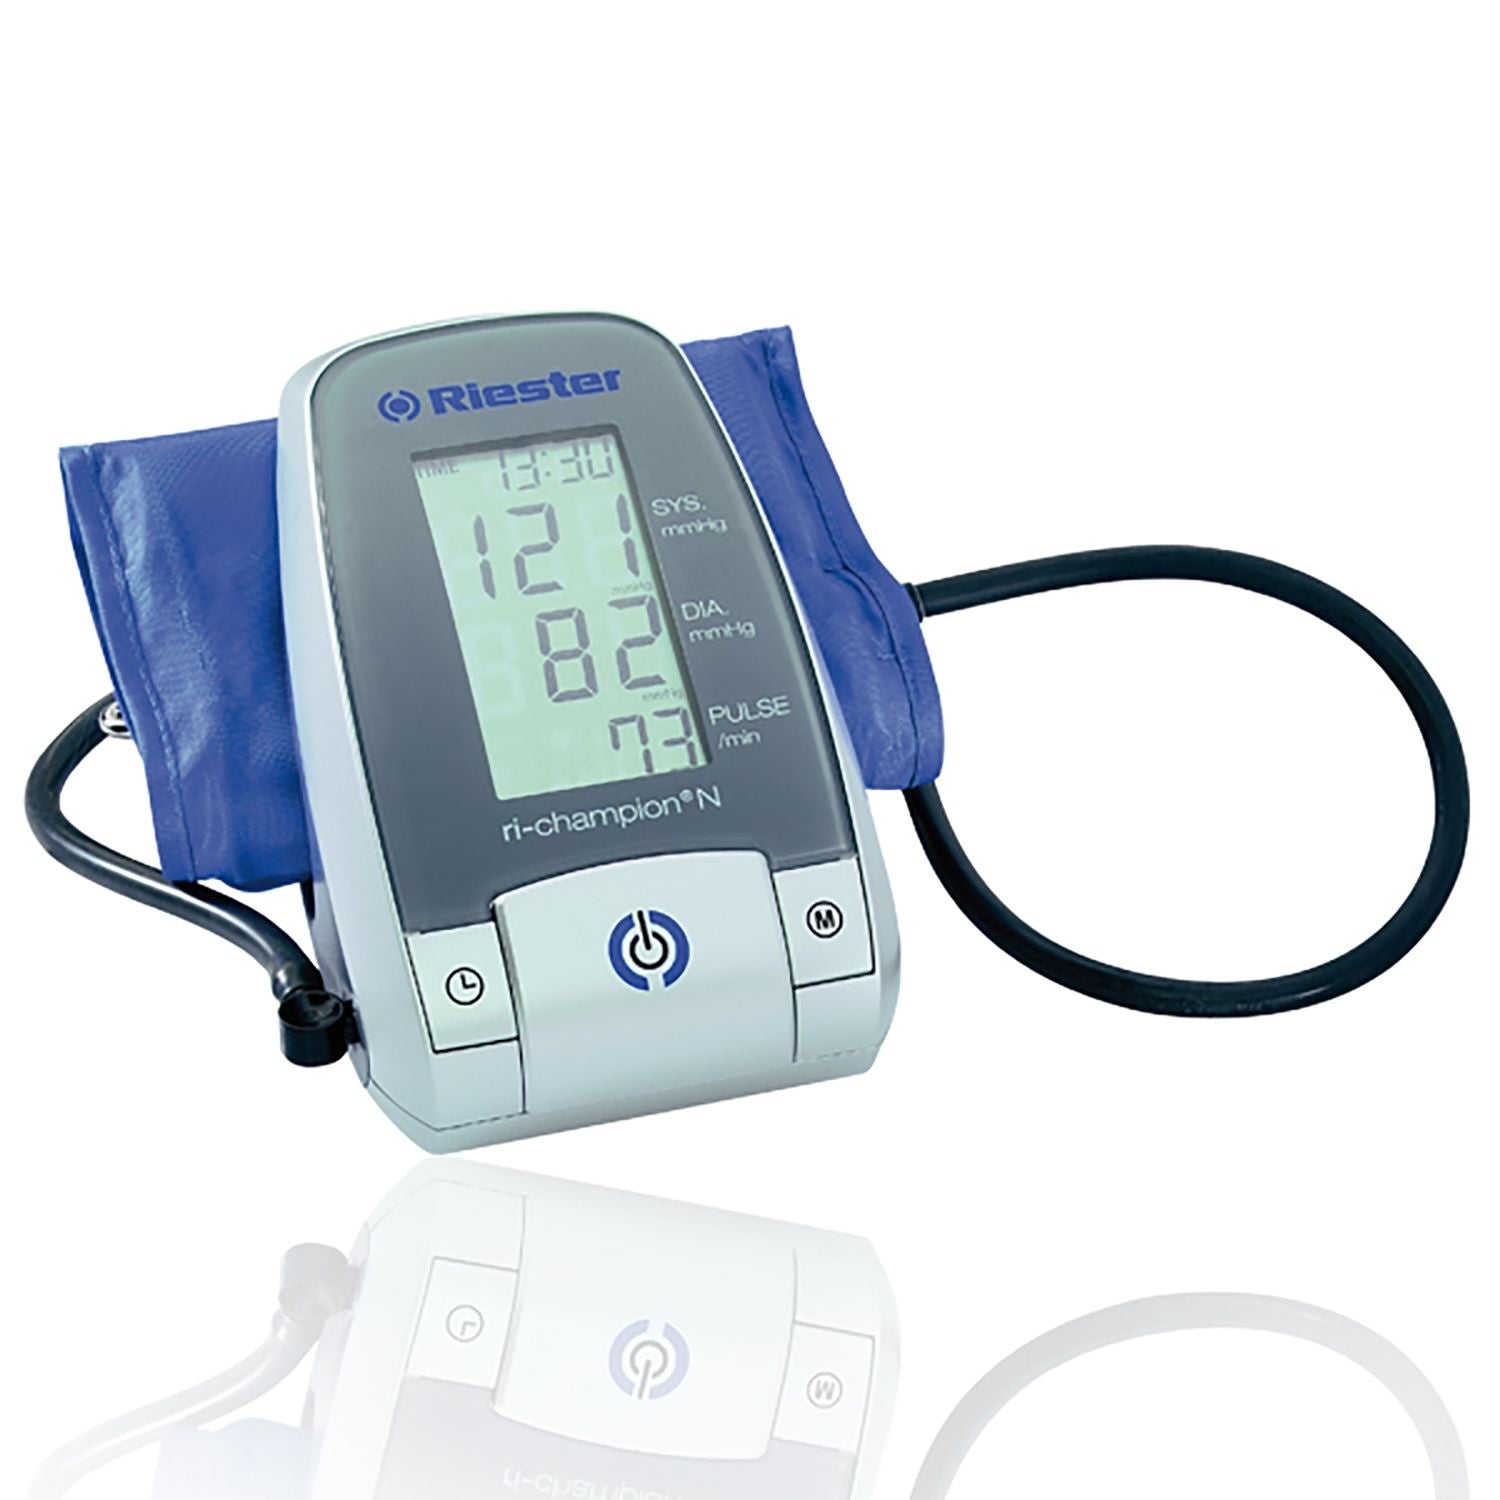 Riester Richampion Digital Blood Measure Monitor